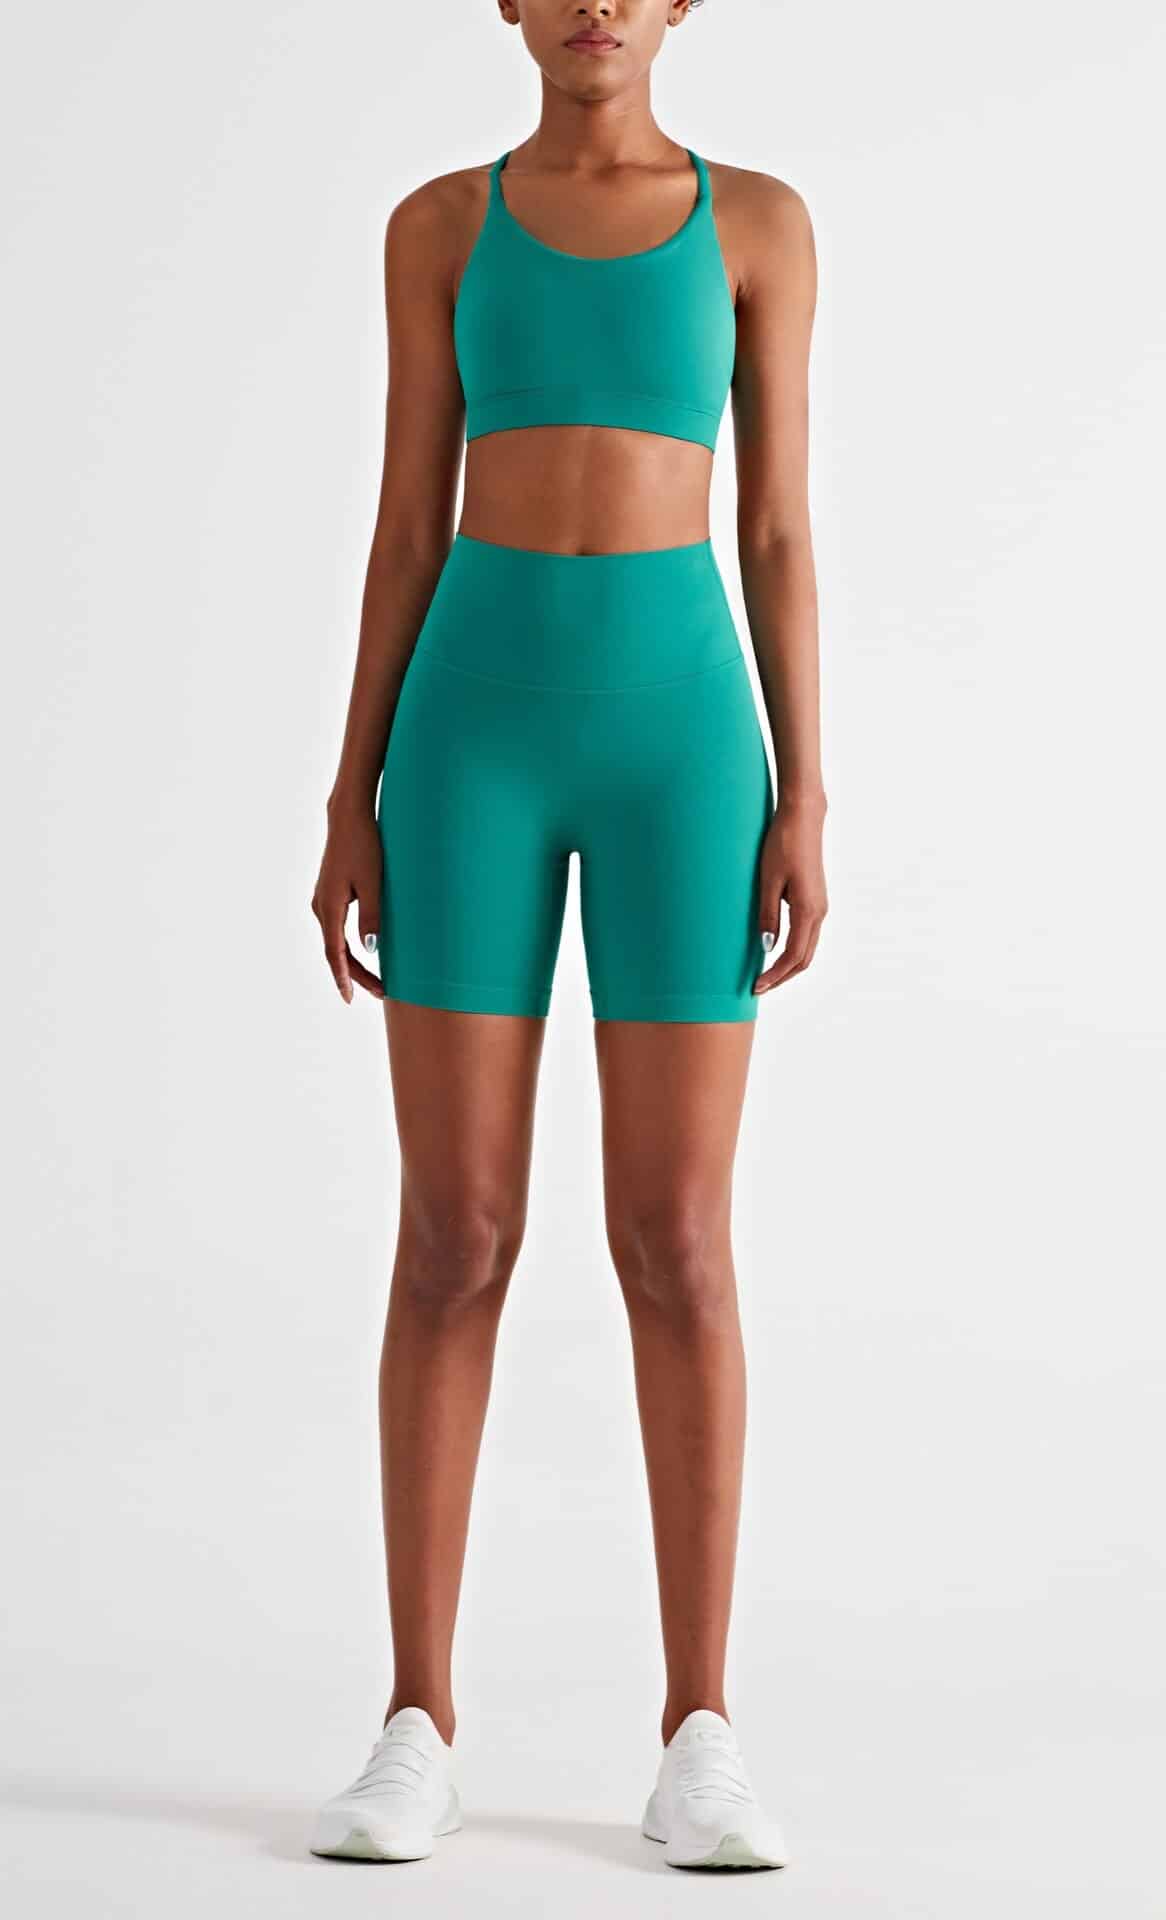 Neon Green Workout Shorts 